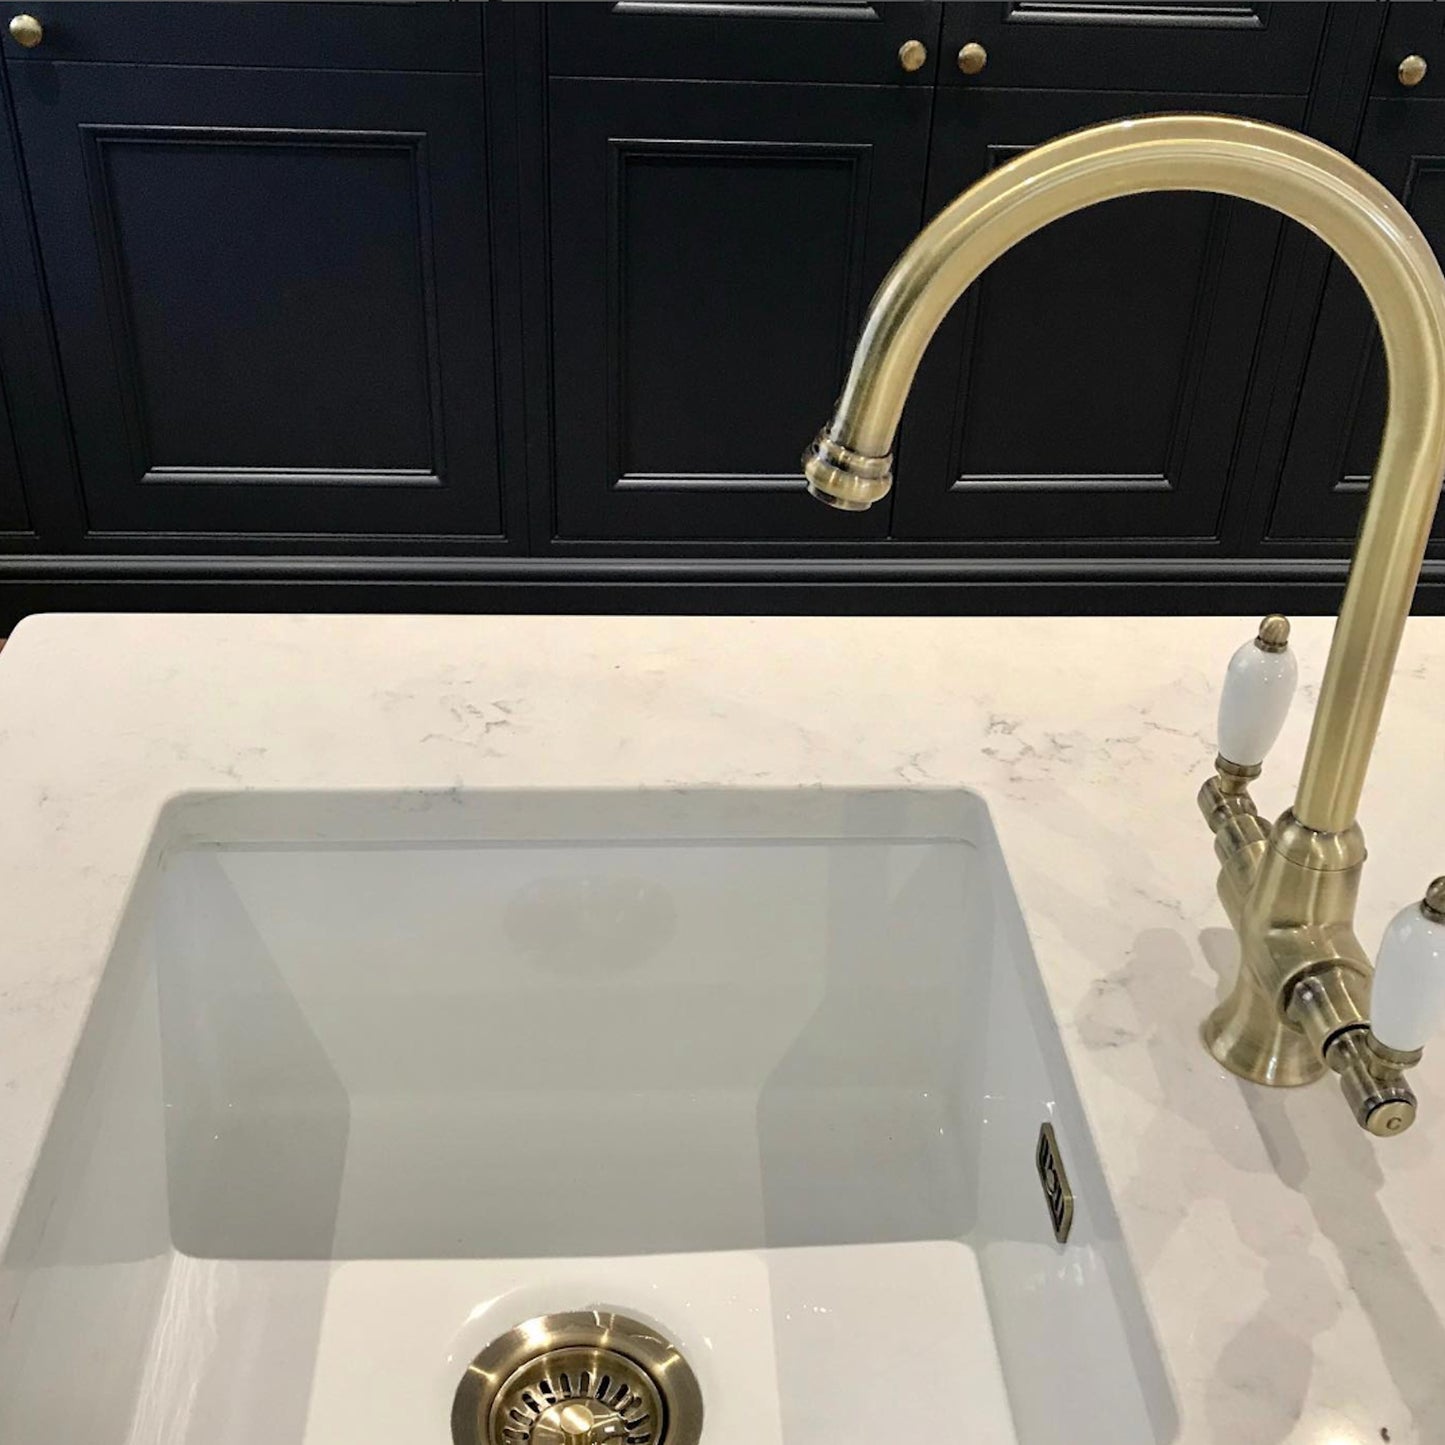 Dorchester Georgian dual flow kitchen sink tap with twin white levers - antique bronze